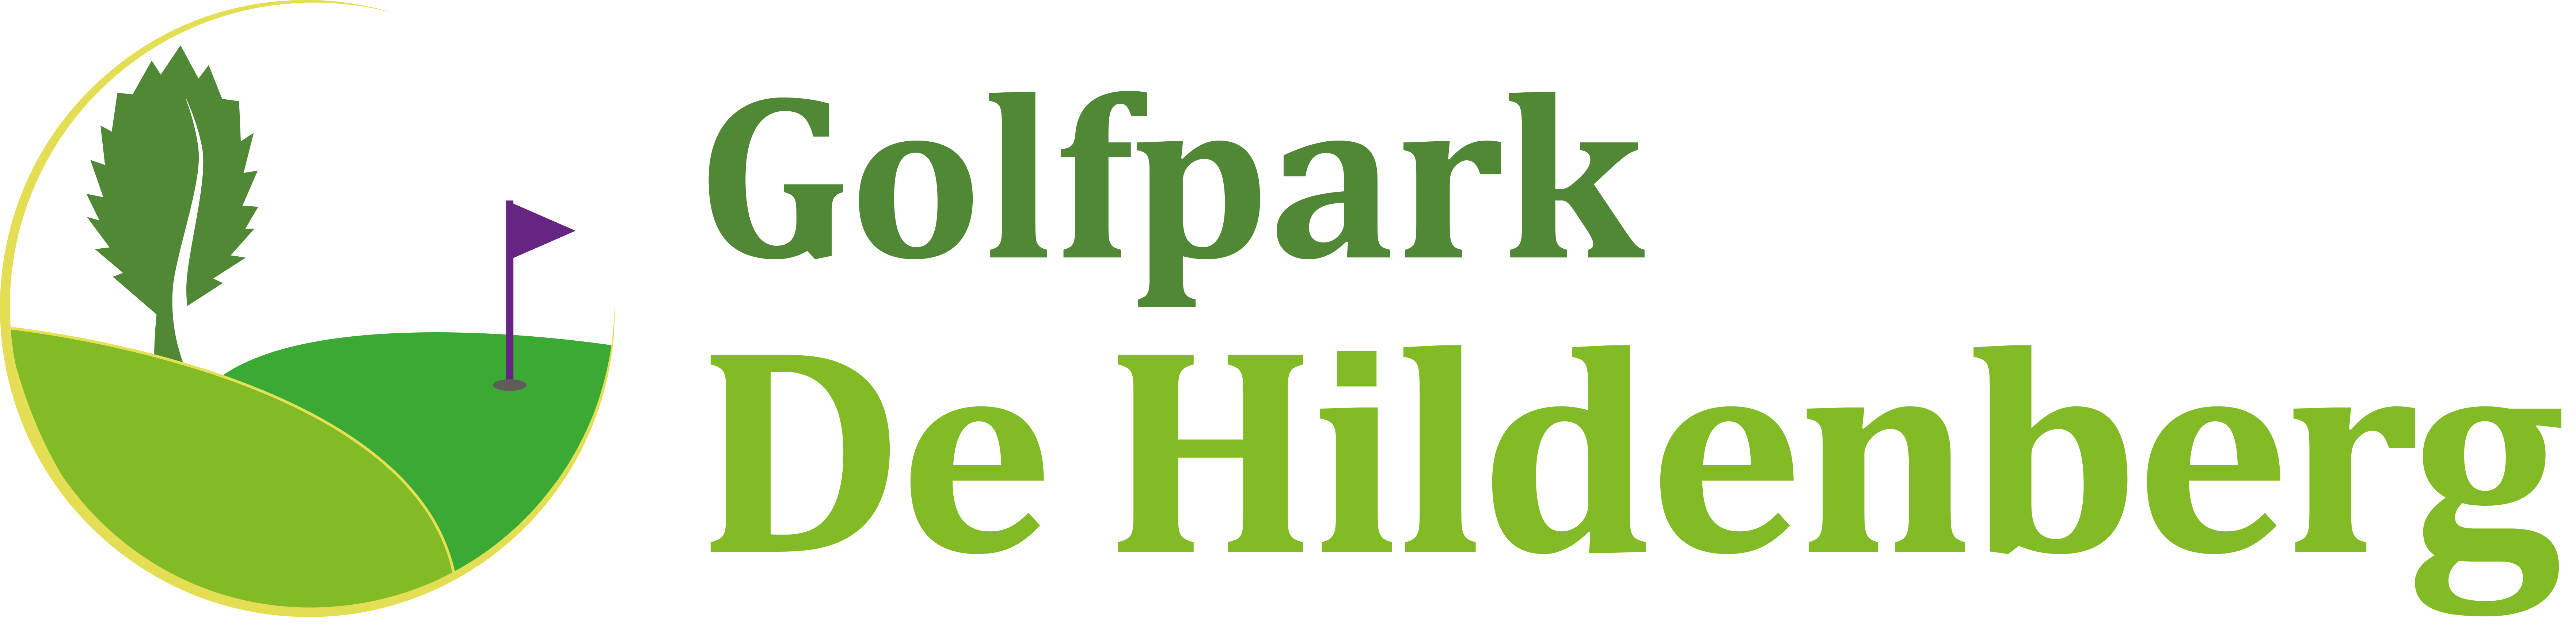 Golfpark De Hildenberg logo